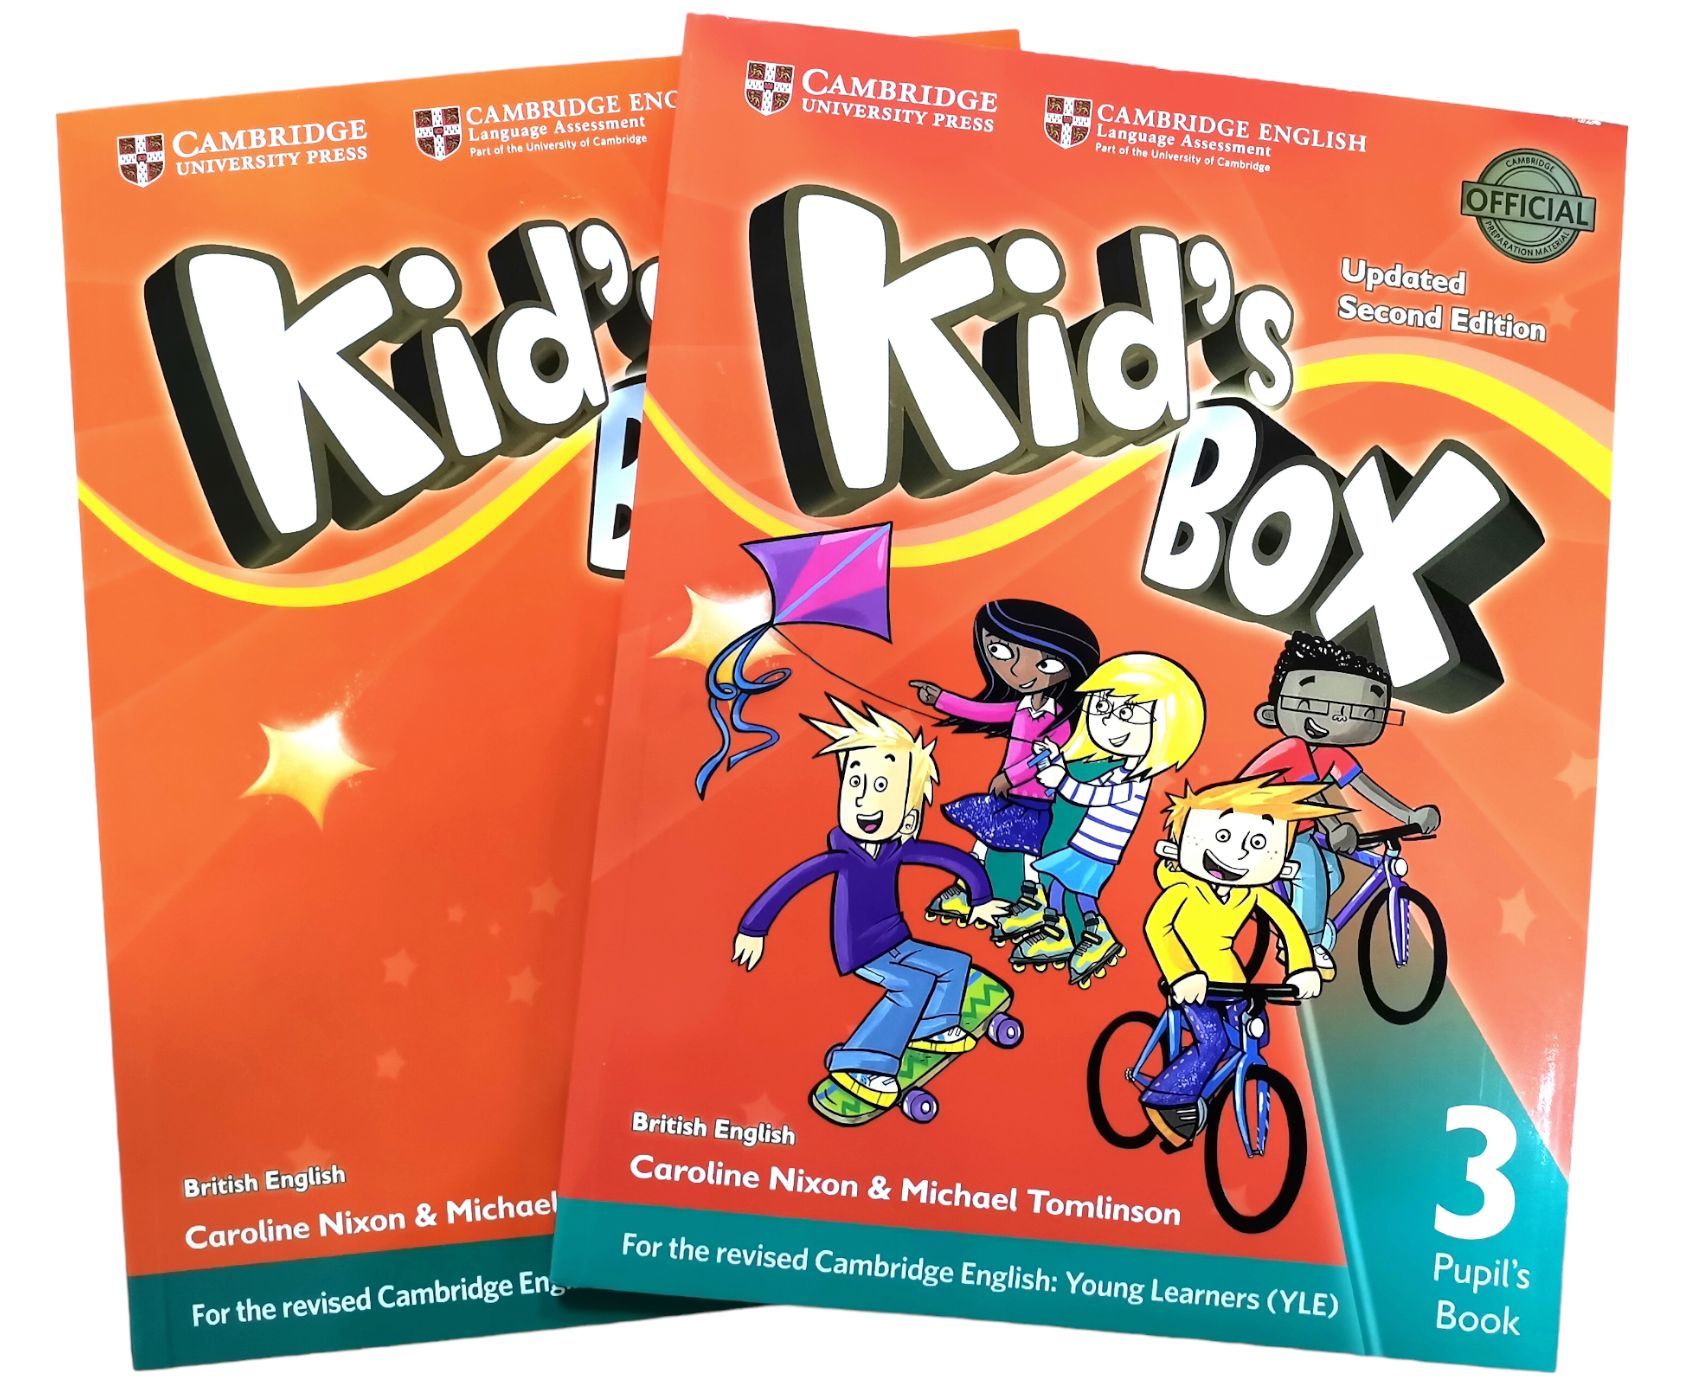 Kids Box 3 activity book. Kids Box 1 pupil's book. Игры и книжки Кидз бокс. DVD бук.